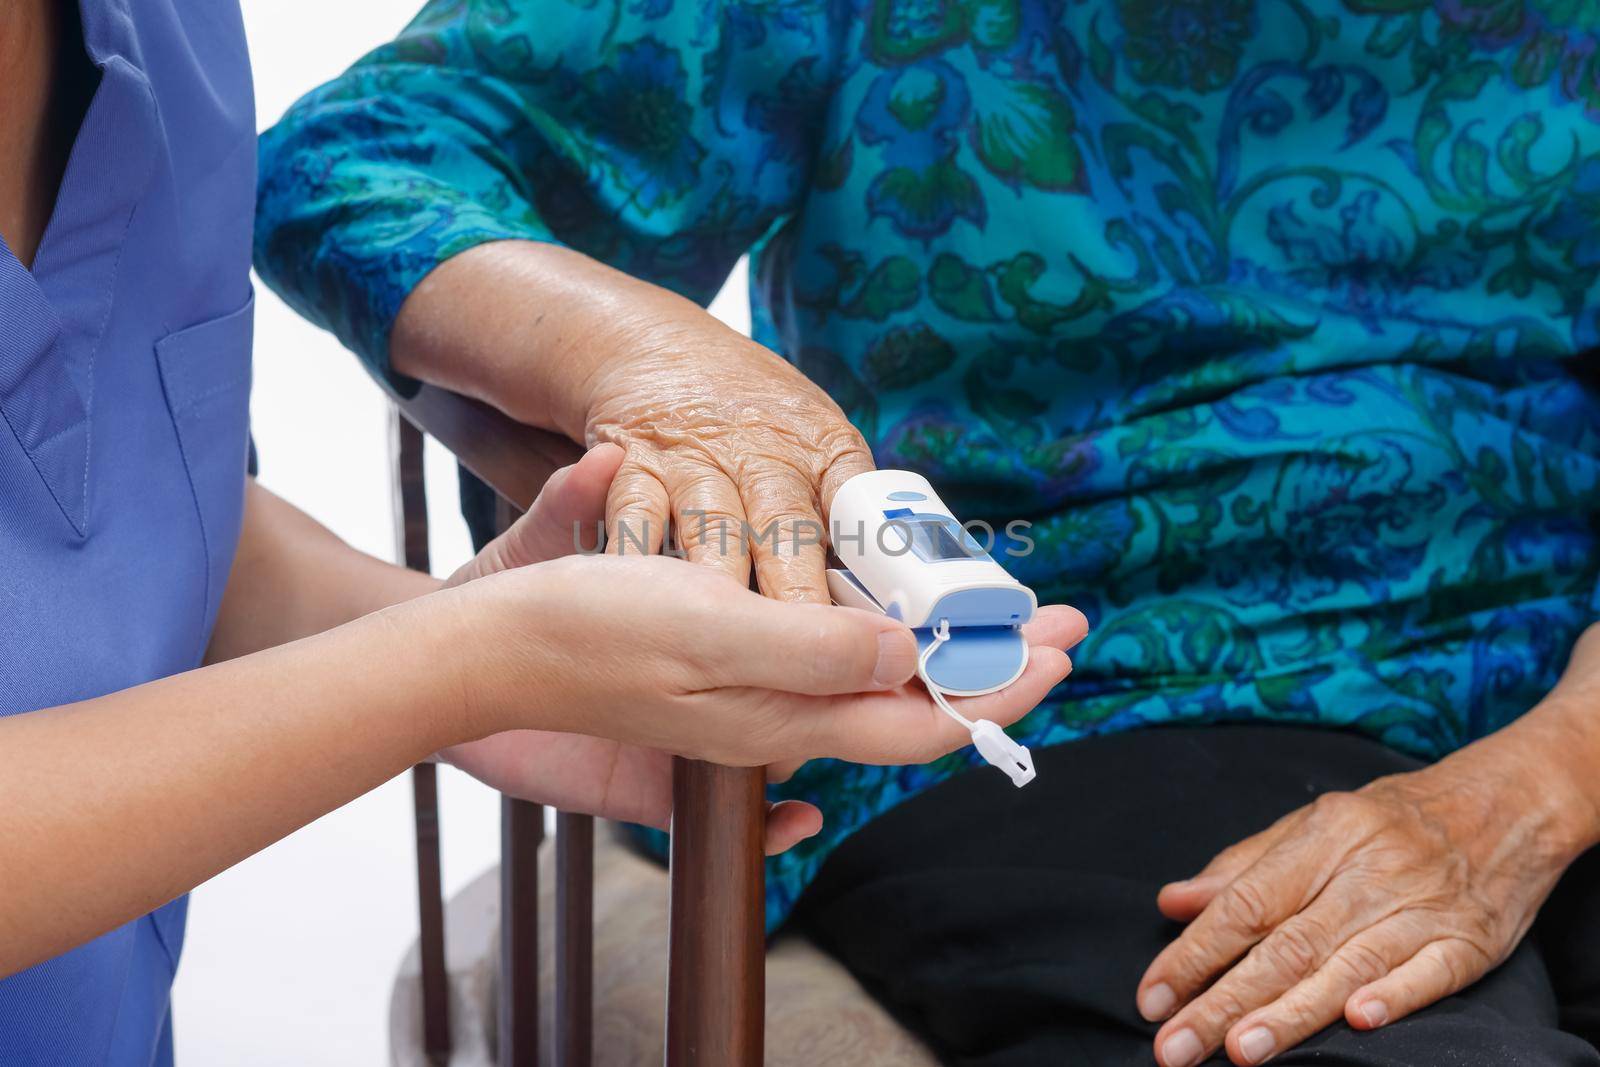 Caregiver monitoring oxygen saturation at fingertip of elderly woman.